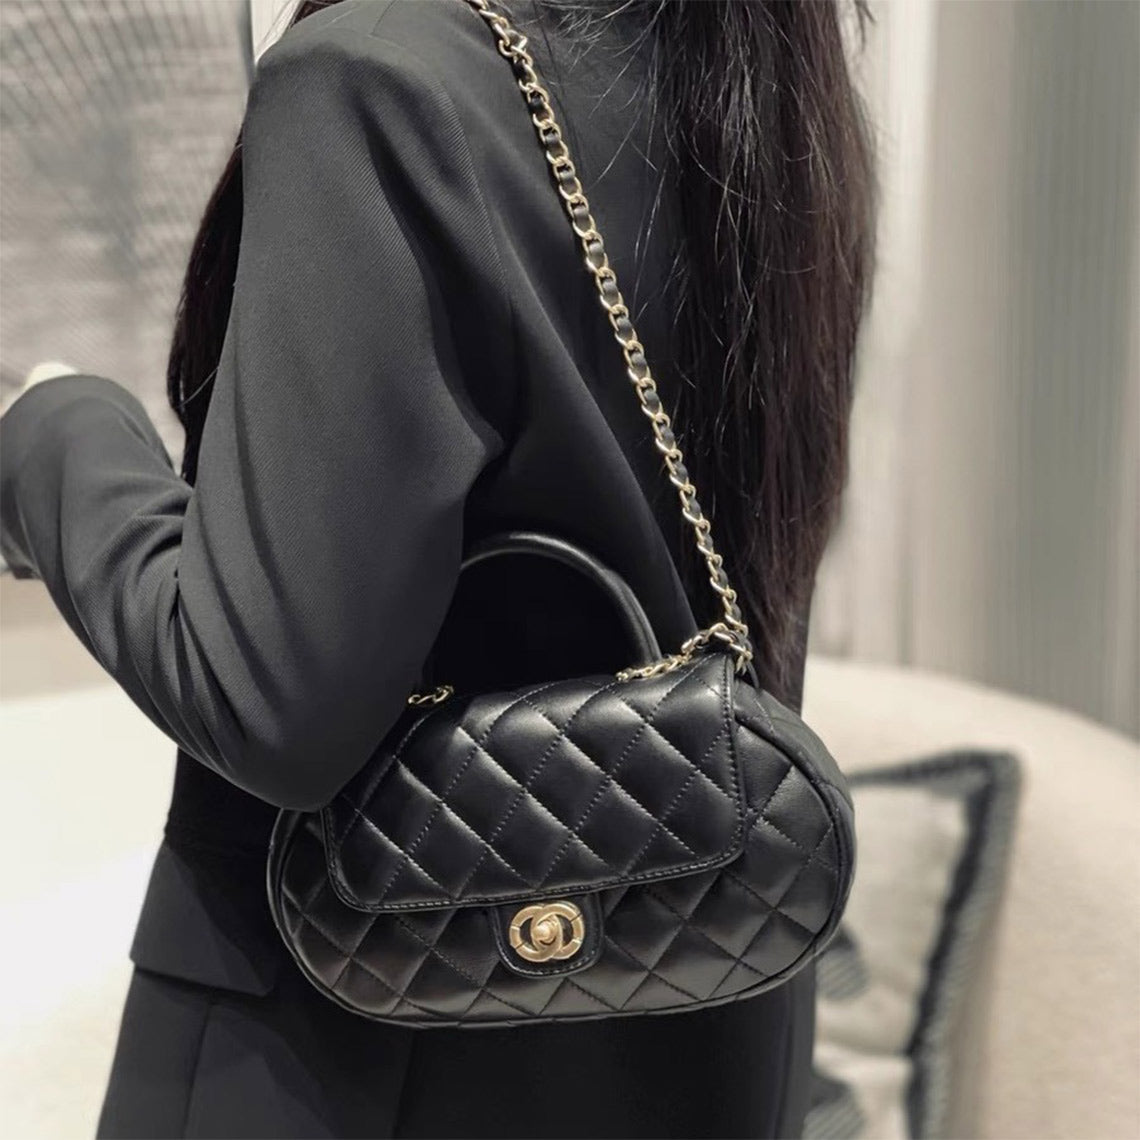 Sheep Leather Inspired Cute Flap Handbag